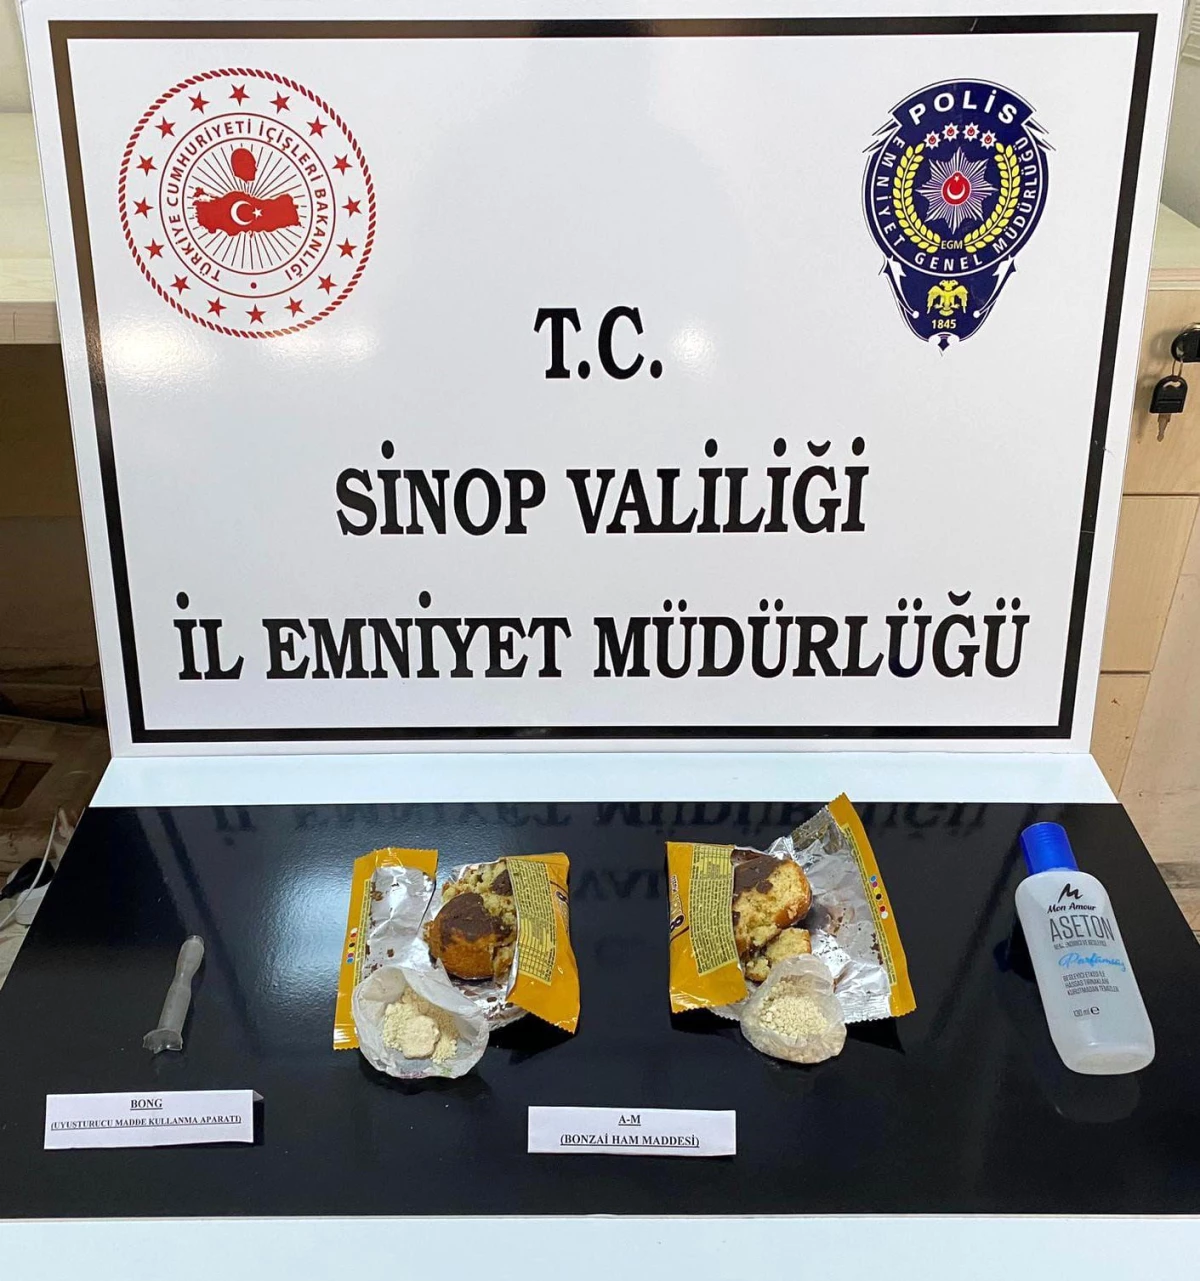 Sinop’ta kek paketlerinde bonzai ele geçirildi